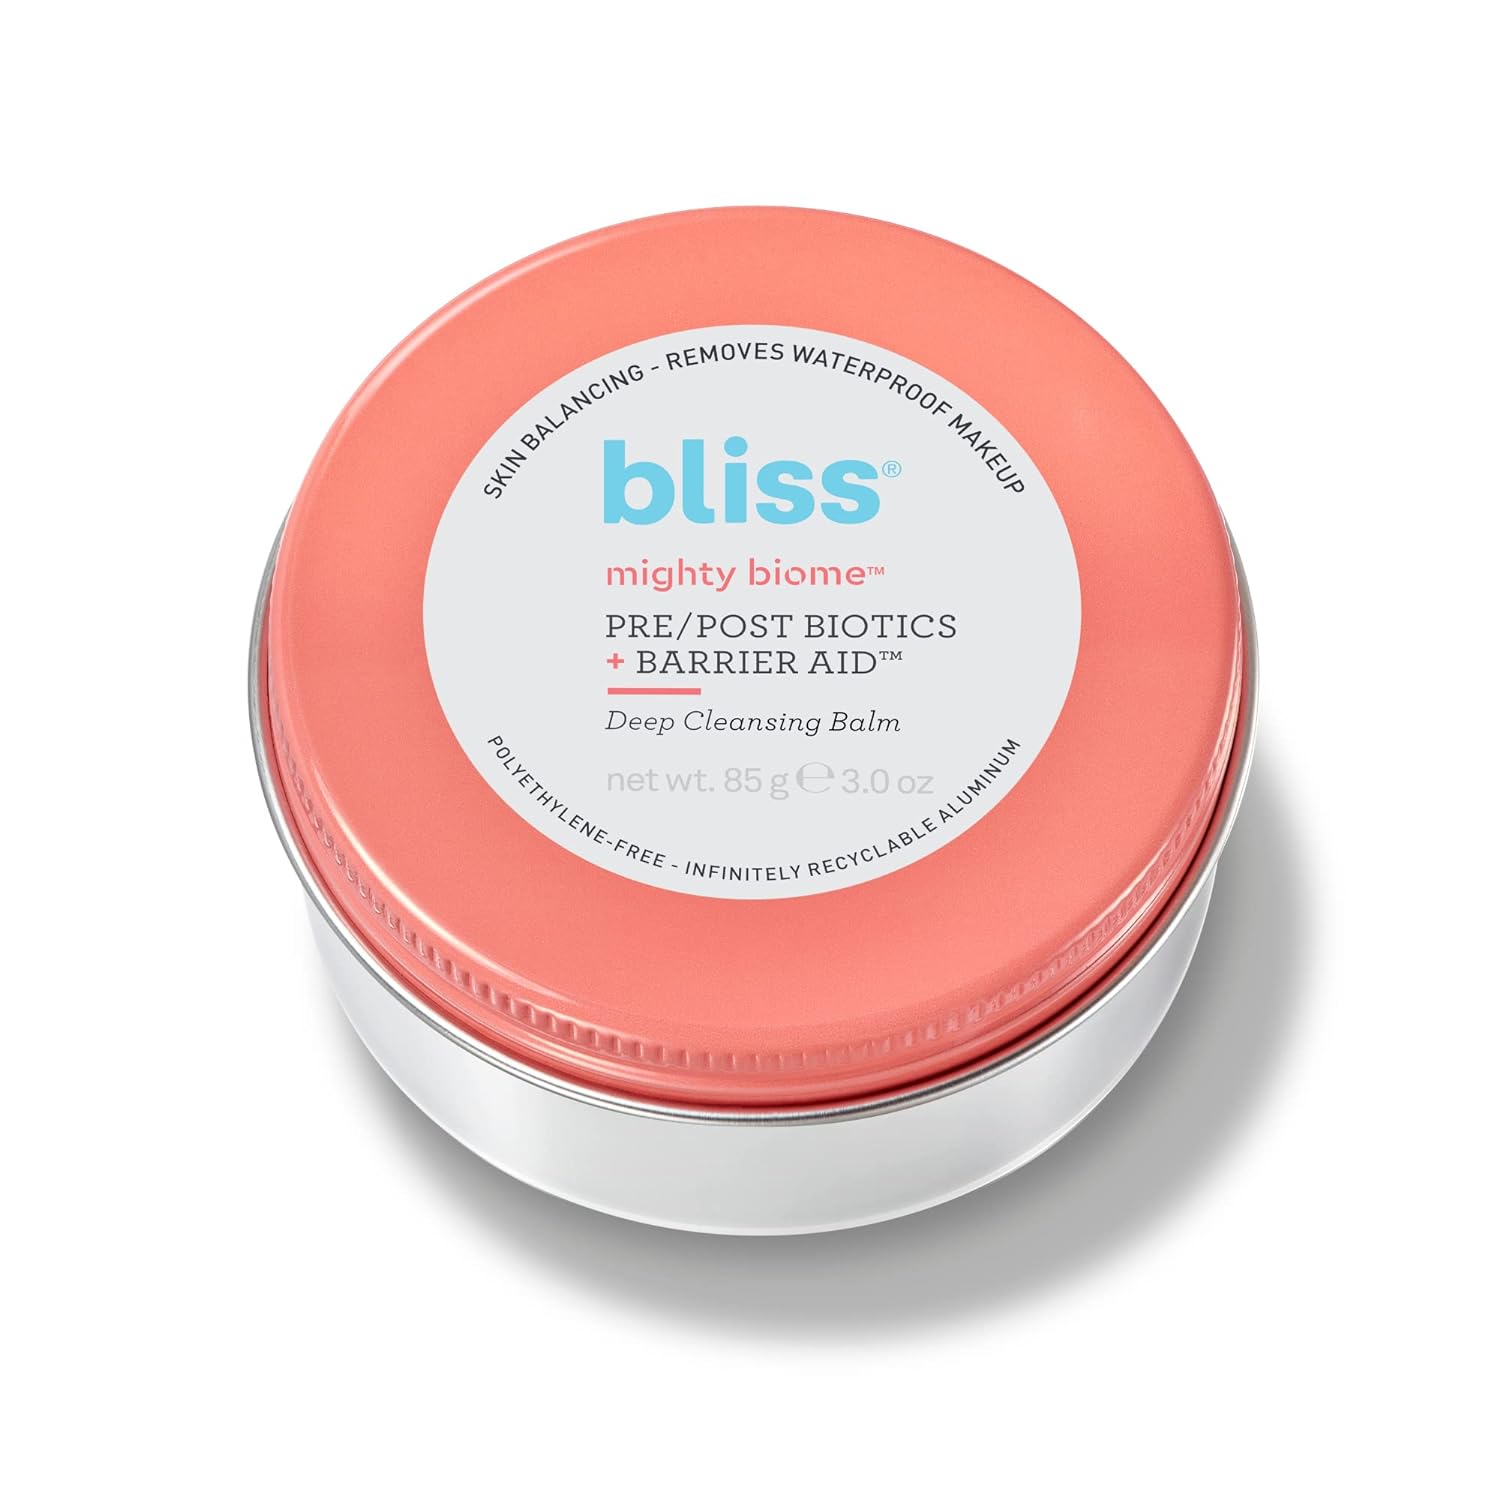 Bliss Mighty Biome Deep Cleansing Balm - 3.0 Oz - Dissovlves Waterproof Makeup & Impurities - Pre/Post Biotics + Barrier Aid - Antioxidants Balance Skin Barrier - Clean - Vegan : Beauty & Personal Care